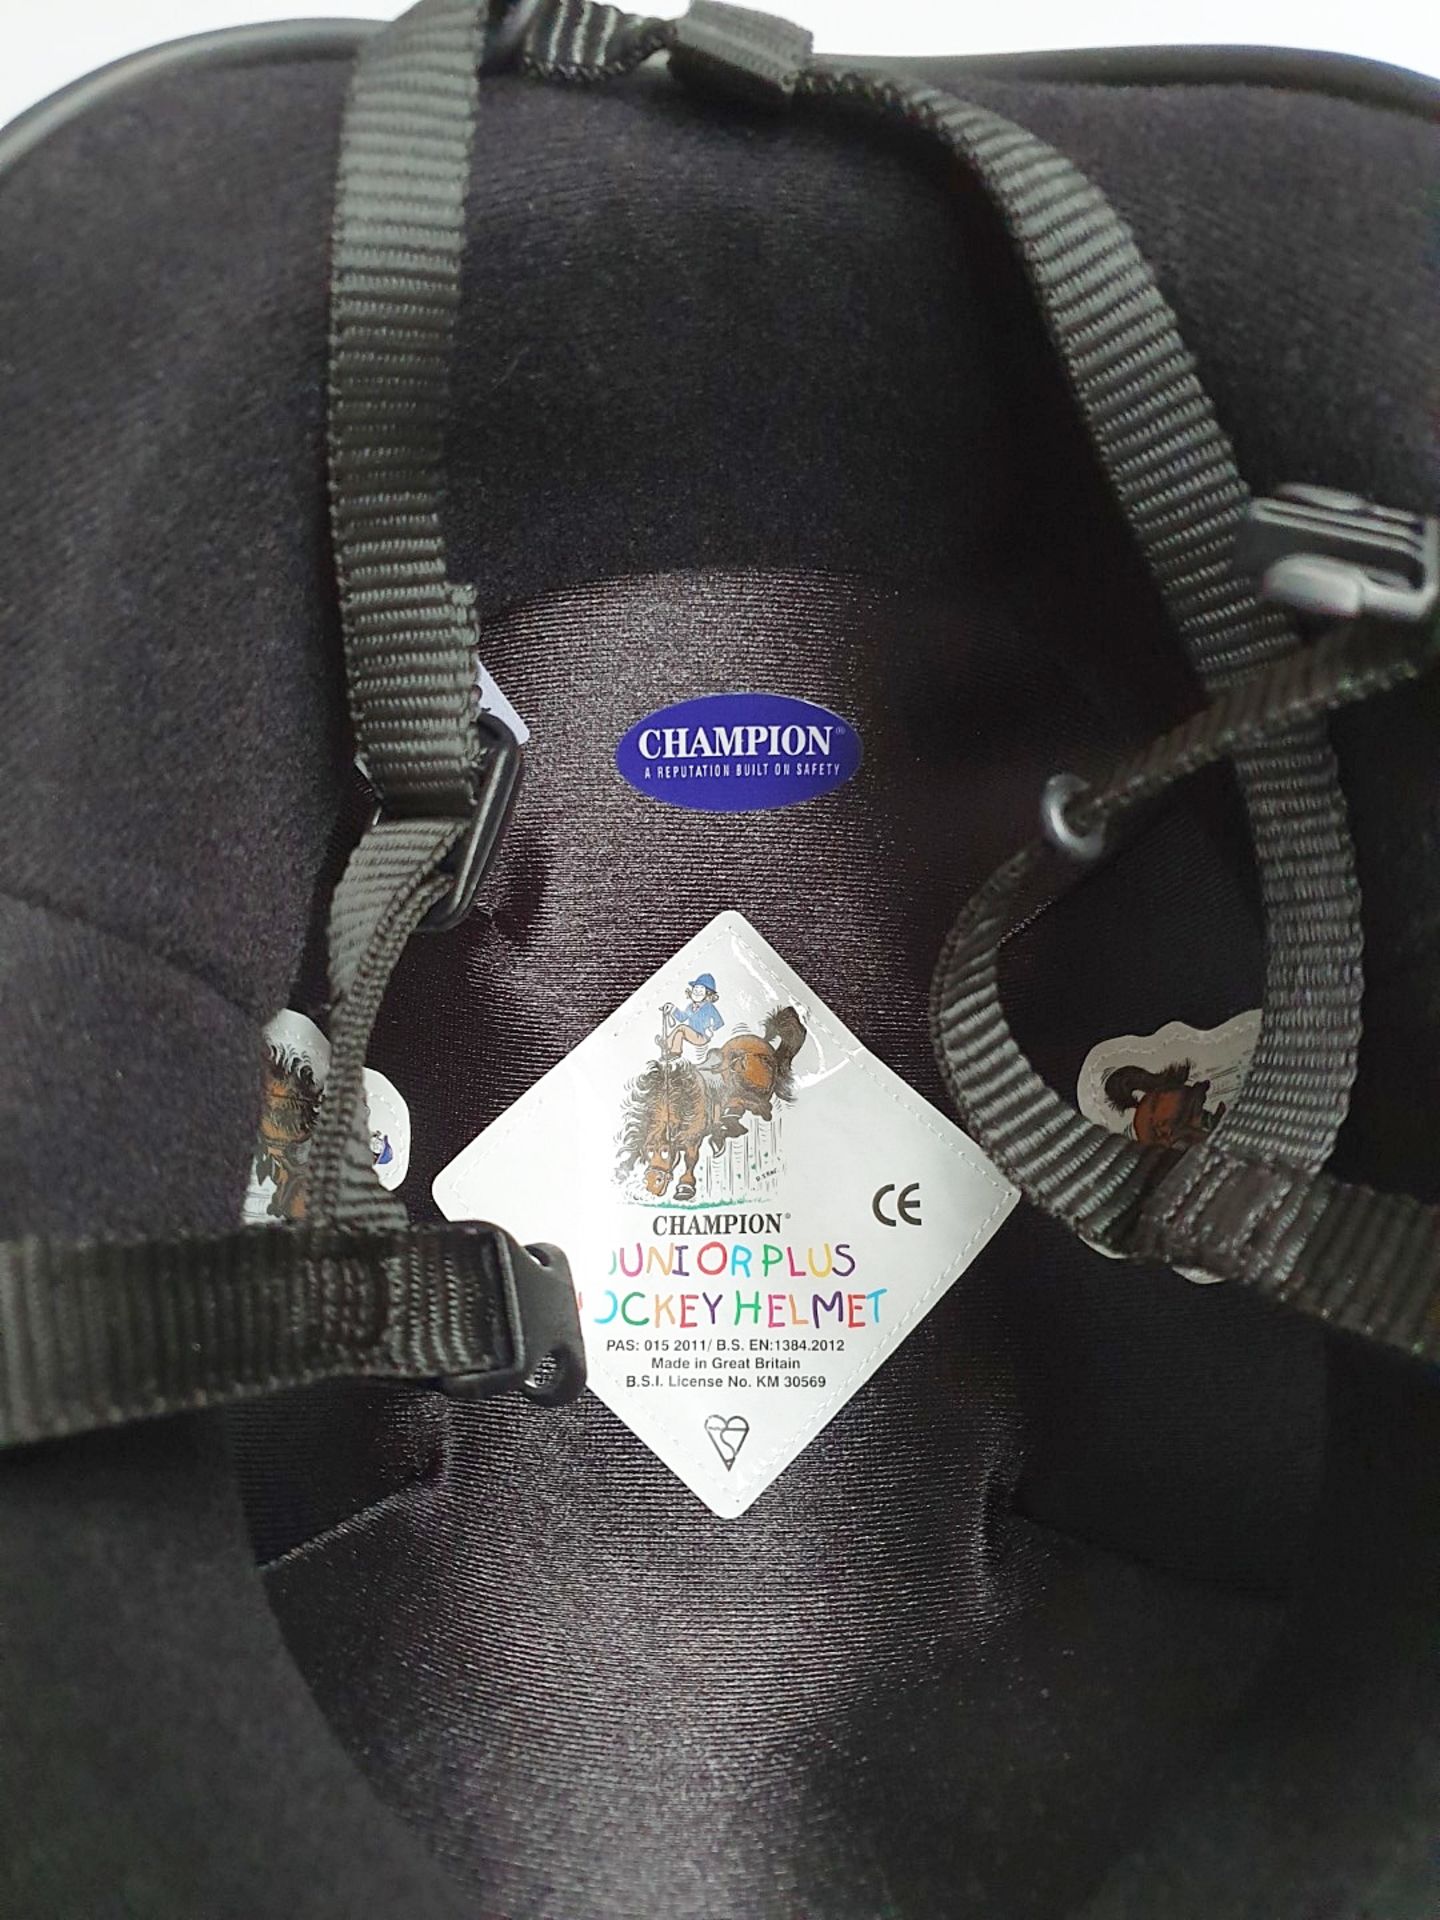 1 x Junior Plus Equestrian Jockey Helmet in Black - Size: 59-60cm - Ref726 - CL401 - Brand New Stock - Image 5 of 7